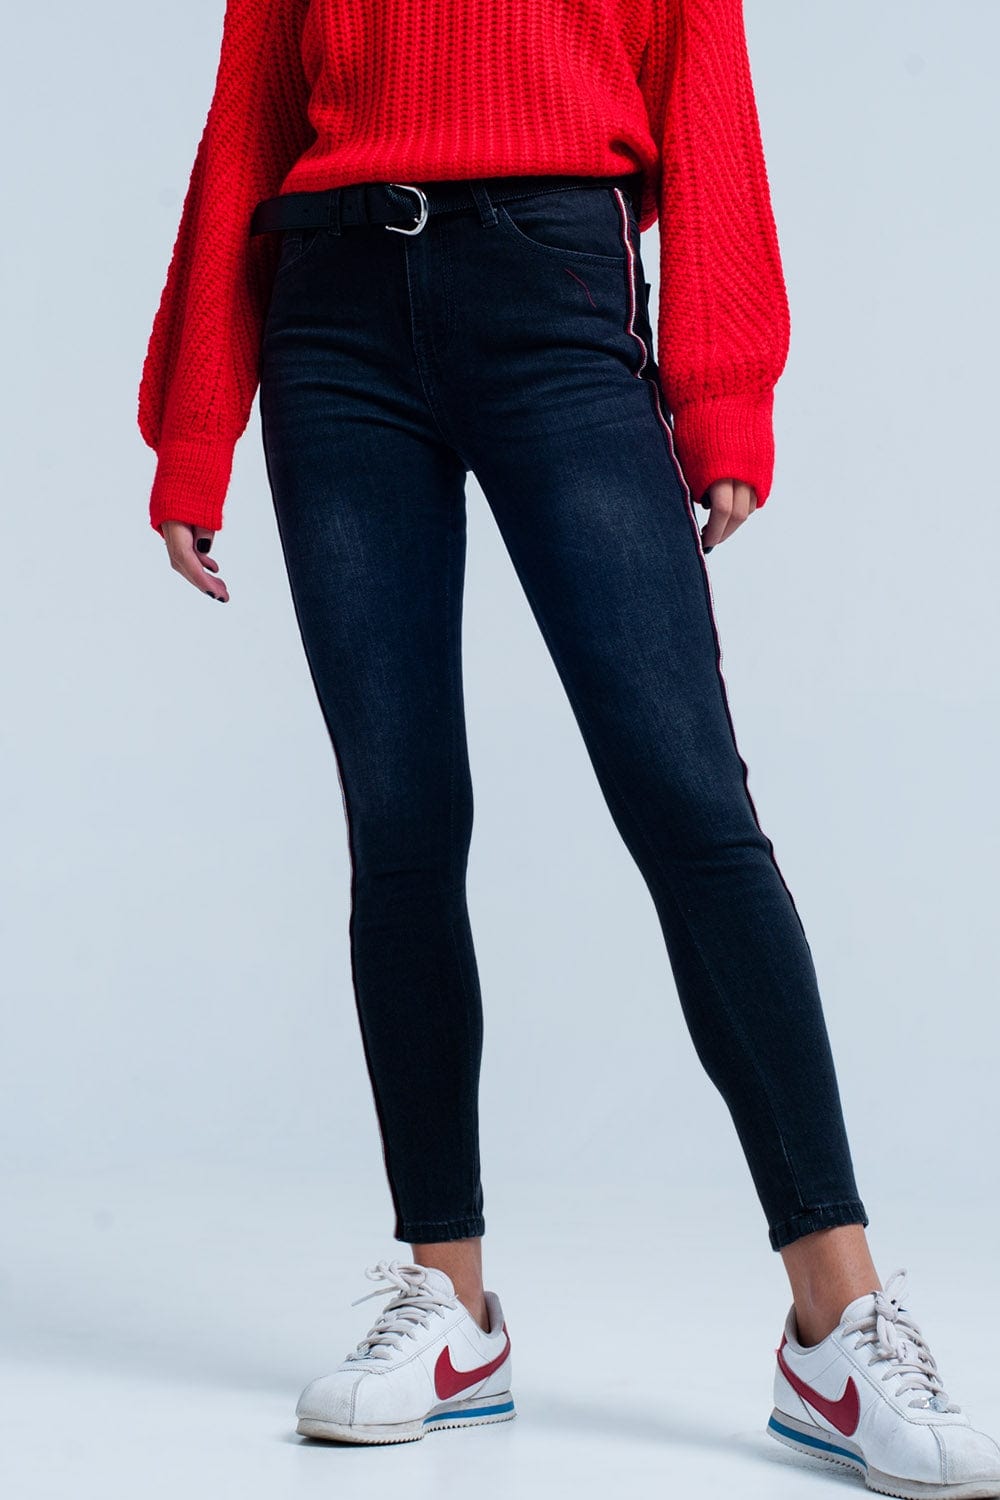 Q2 Women's Jean Black Skinny Jeans with Red Side Stripe